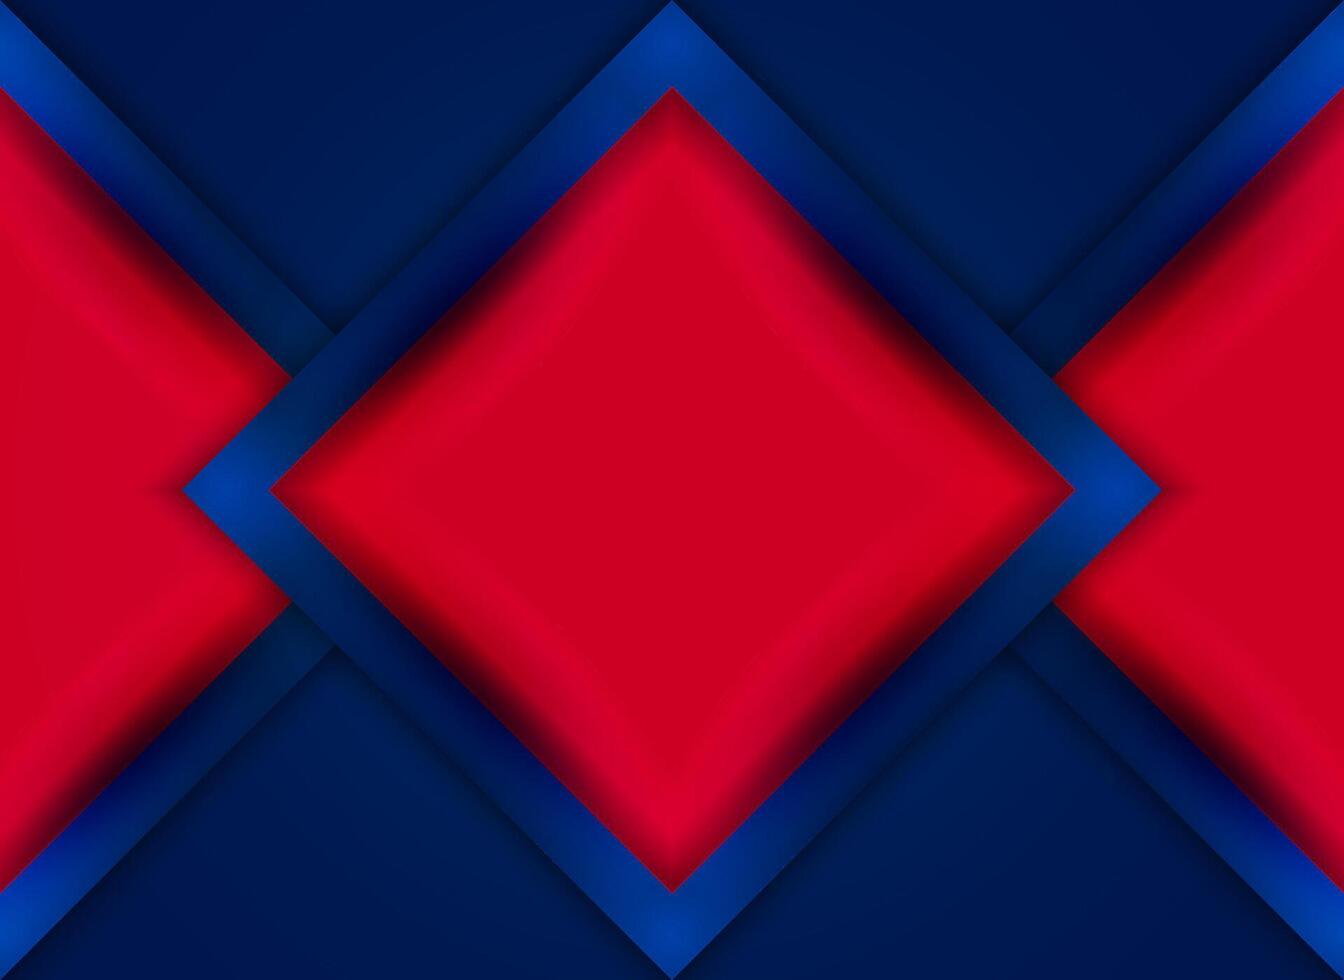 abstrakt röd och blå bakgrund med diamant former, triangel- polygon bakgrund band geometrisk abstrakt baner design, Vinka Färg baner geometrisk 3d geometrisk bakgrund, vektor